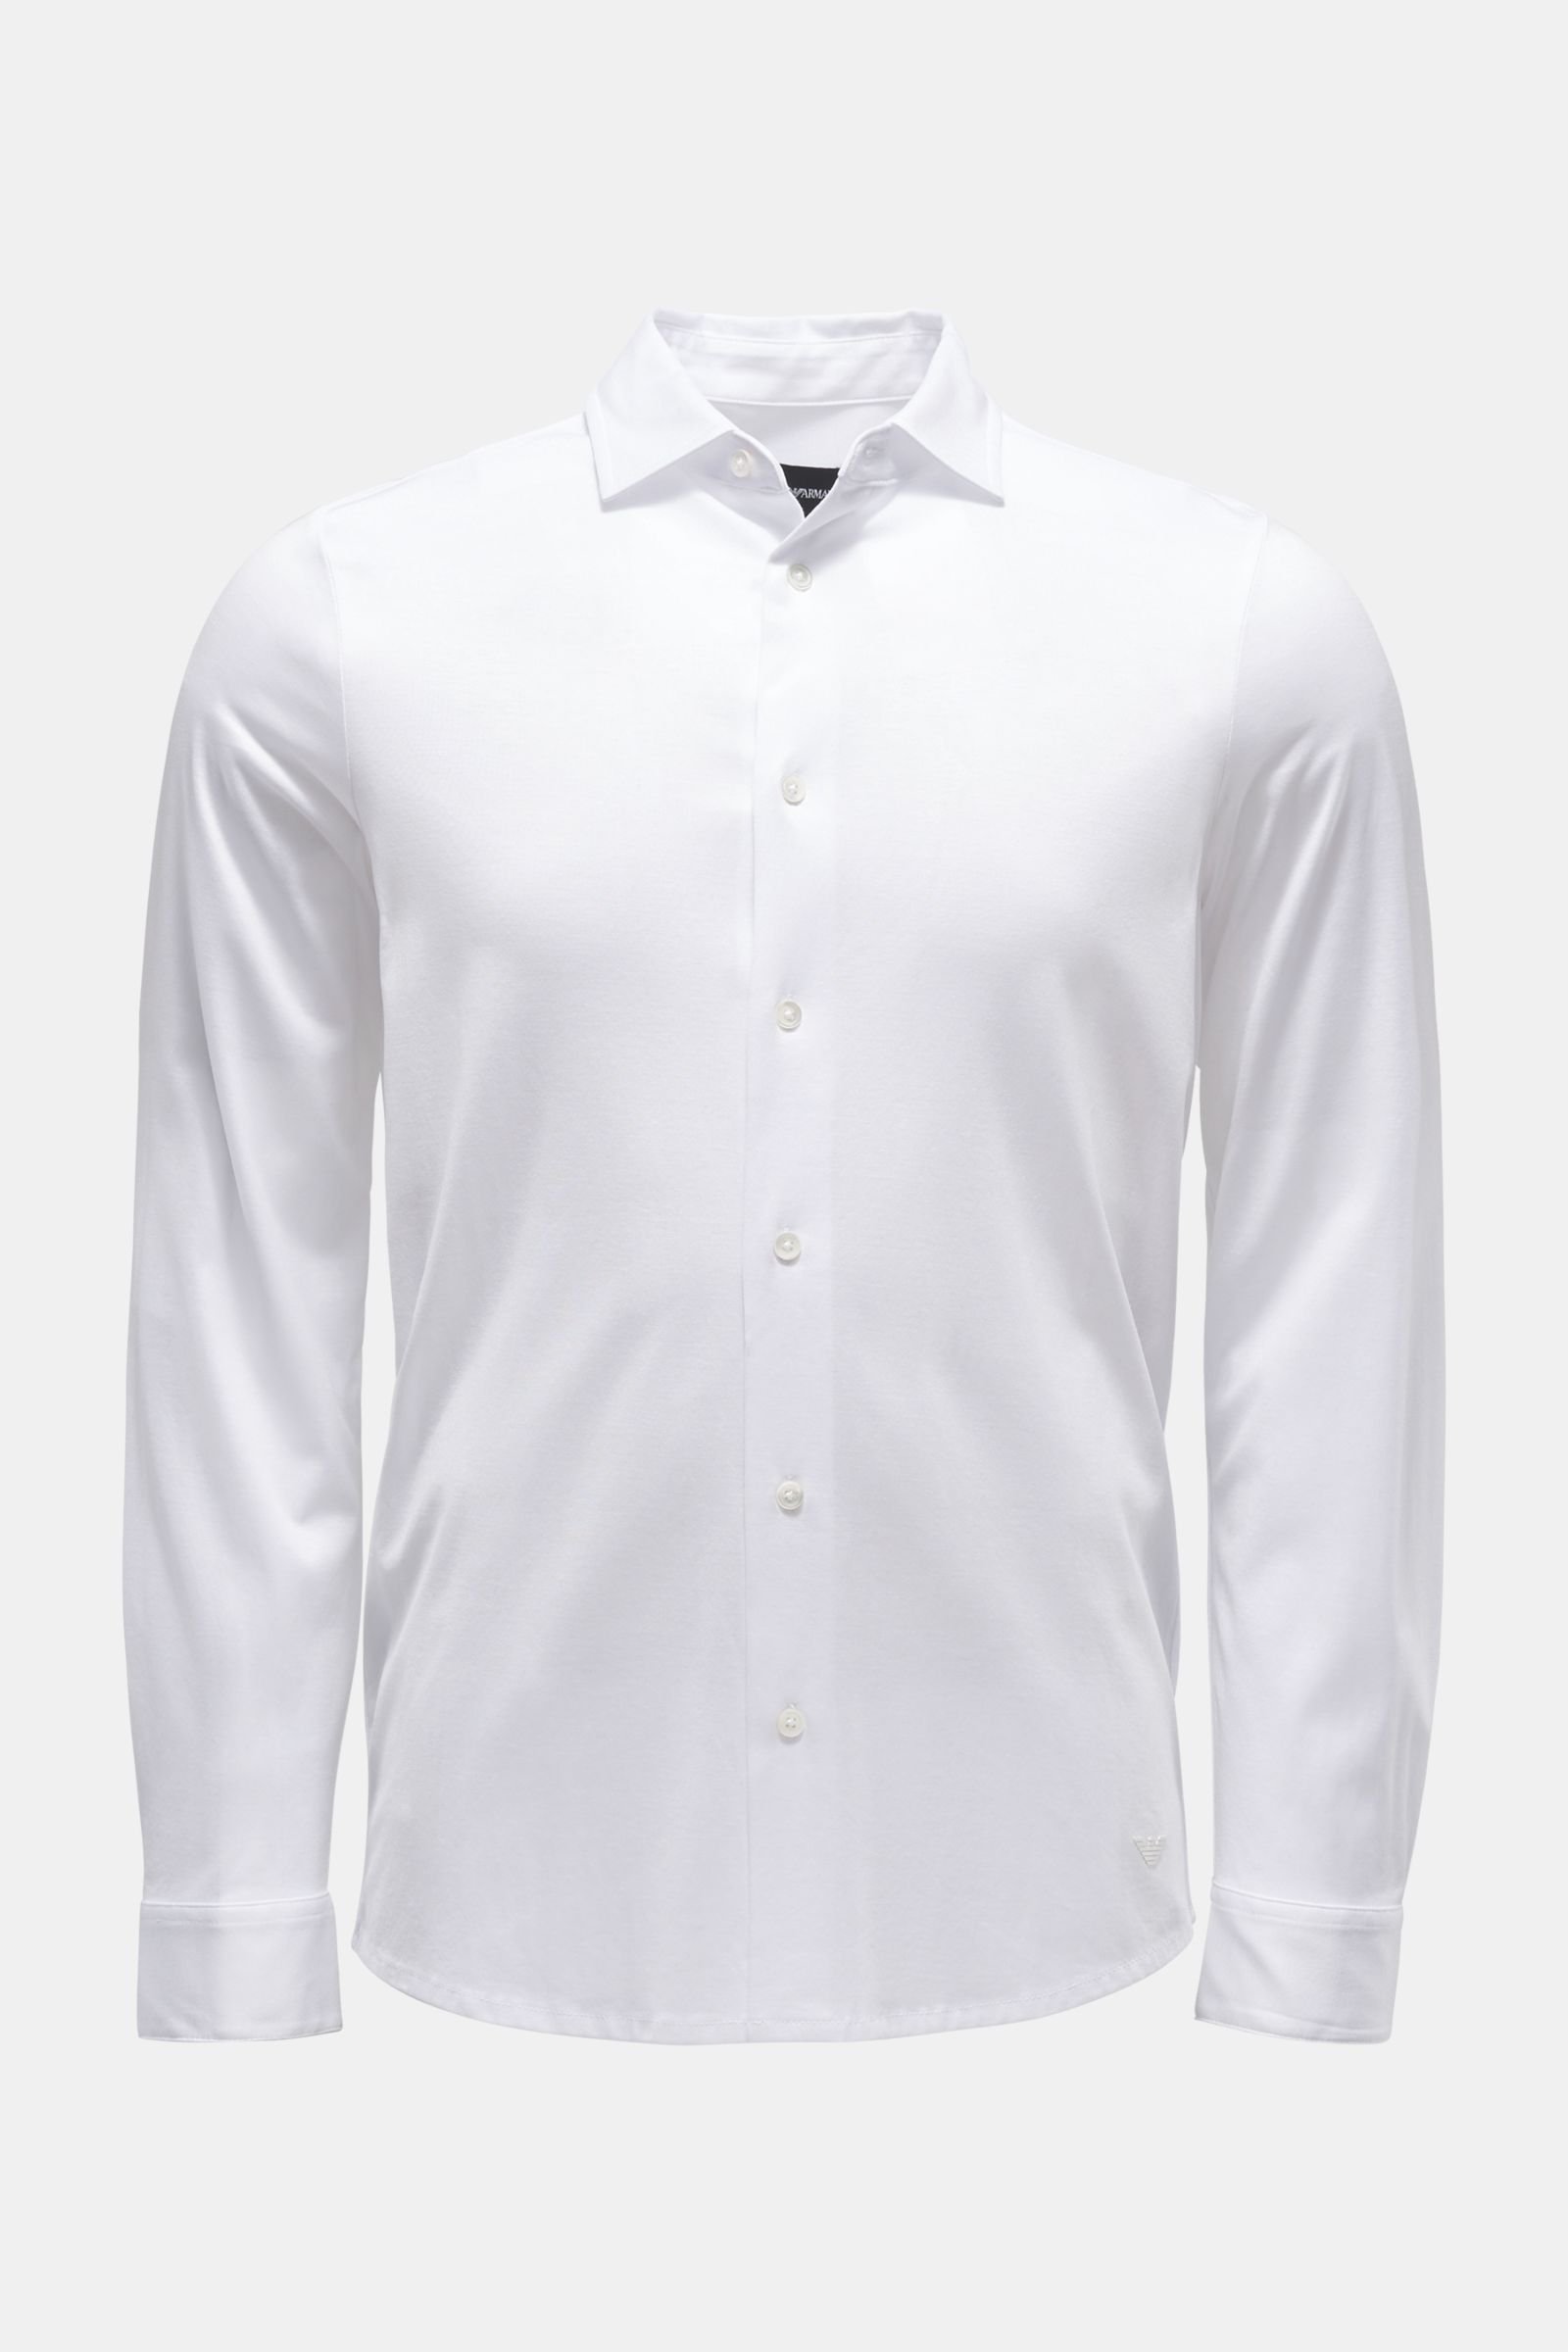 Jersey shirt slim collar white